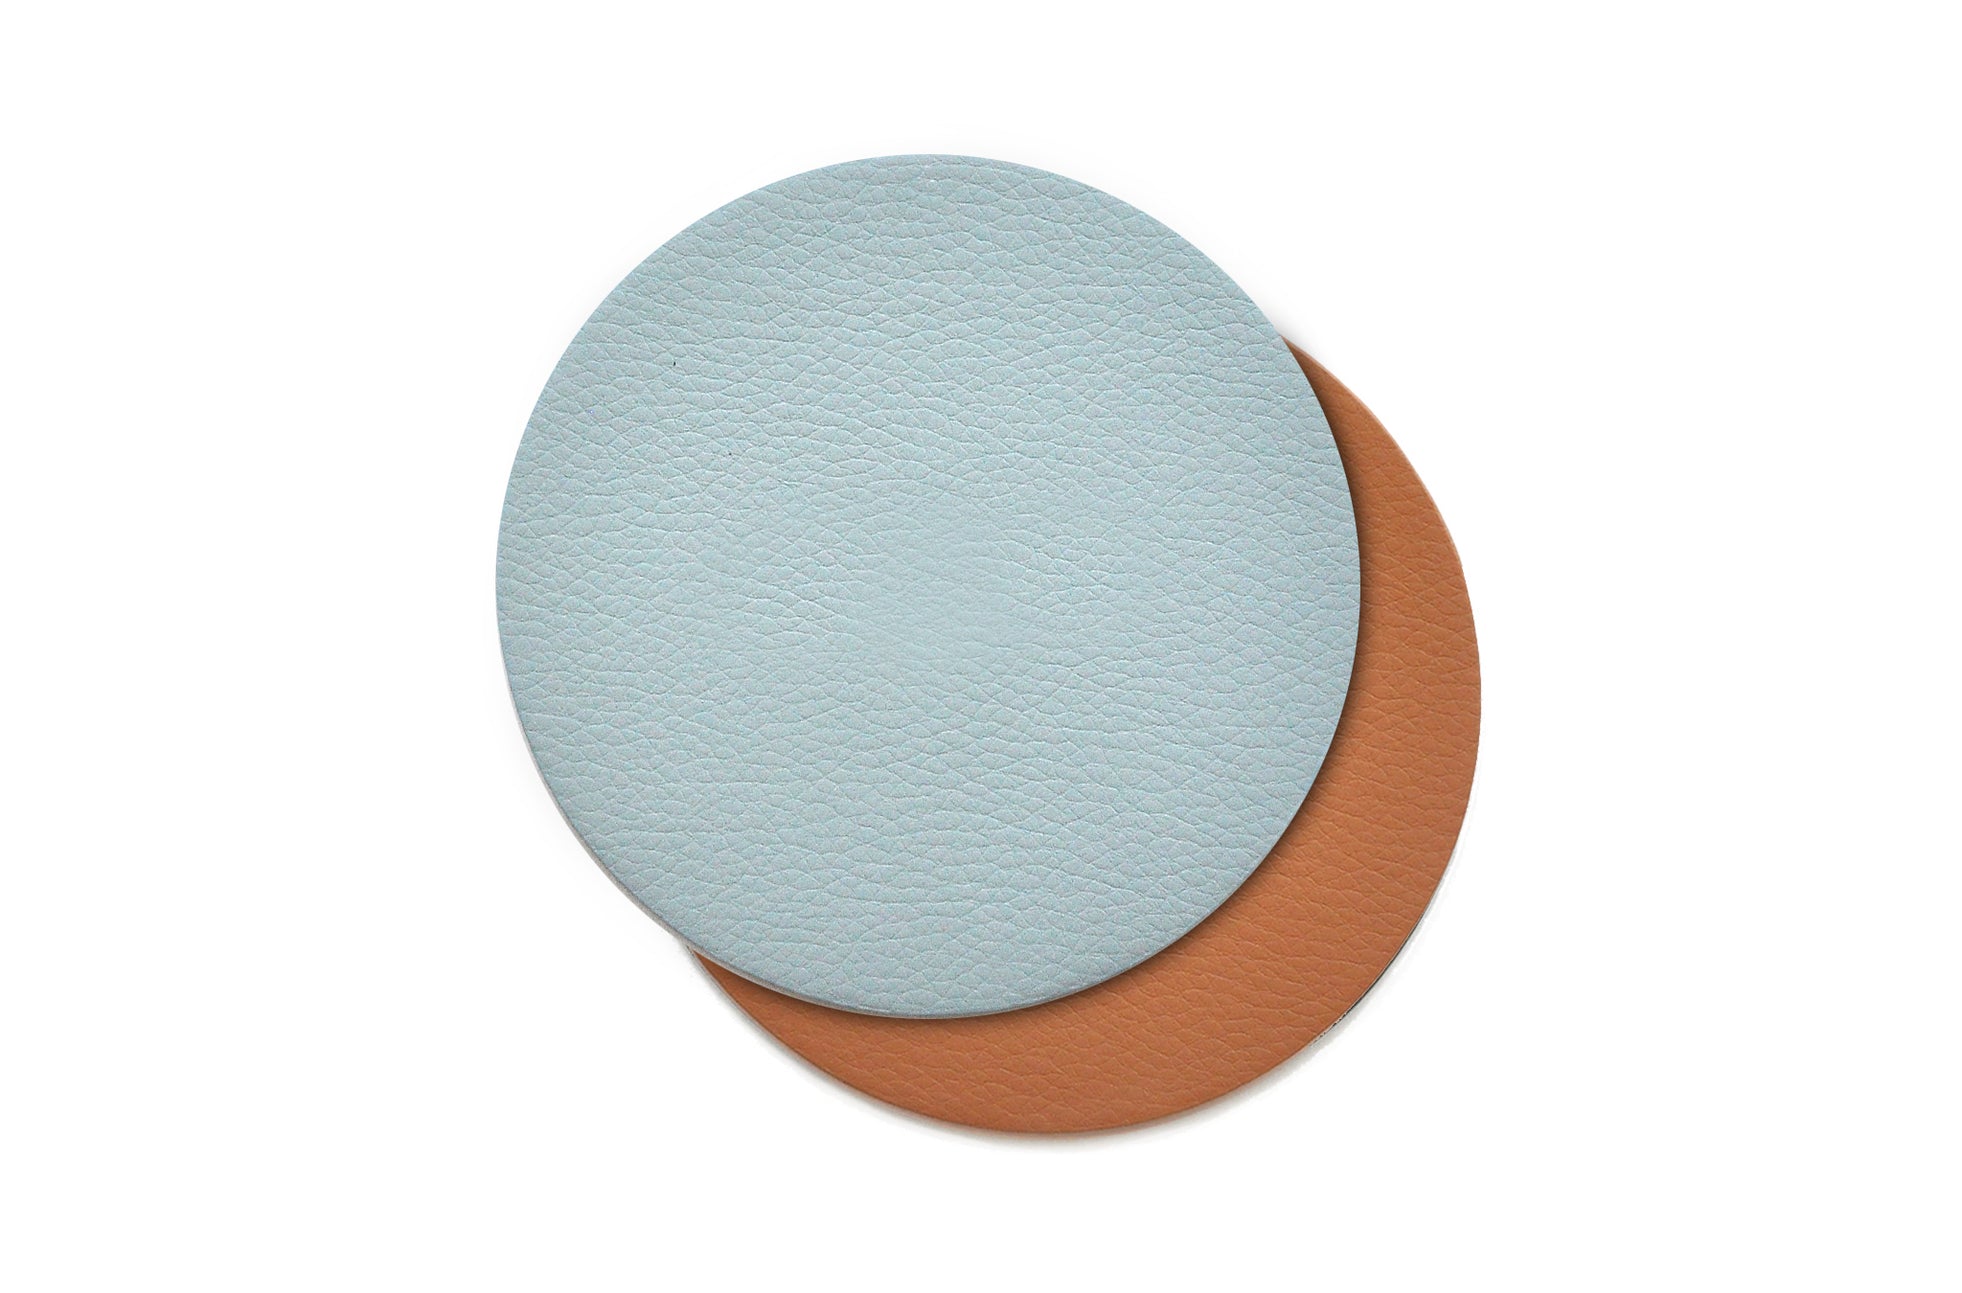 The Coaster Set - Sample Sale in Technik-Leather in Caramel & Sea image 1